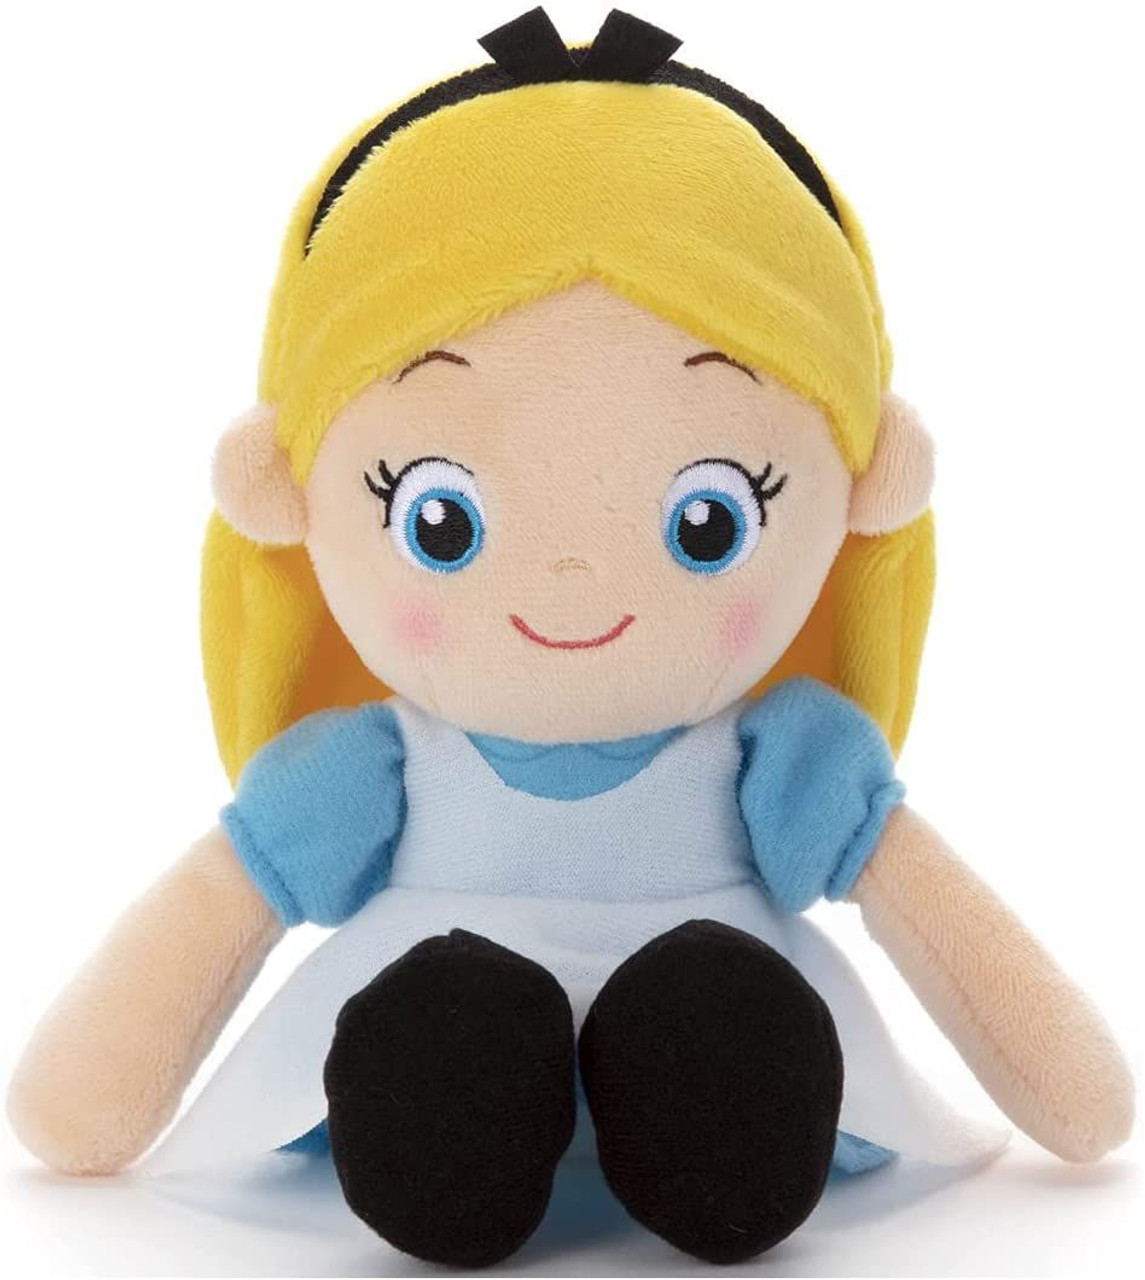 Takara Tomy A.R.T.S Washable Plush Doll Alice (Alice in Wonderland)